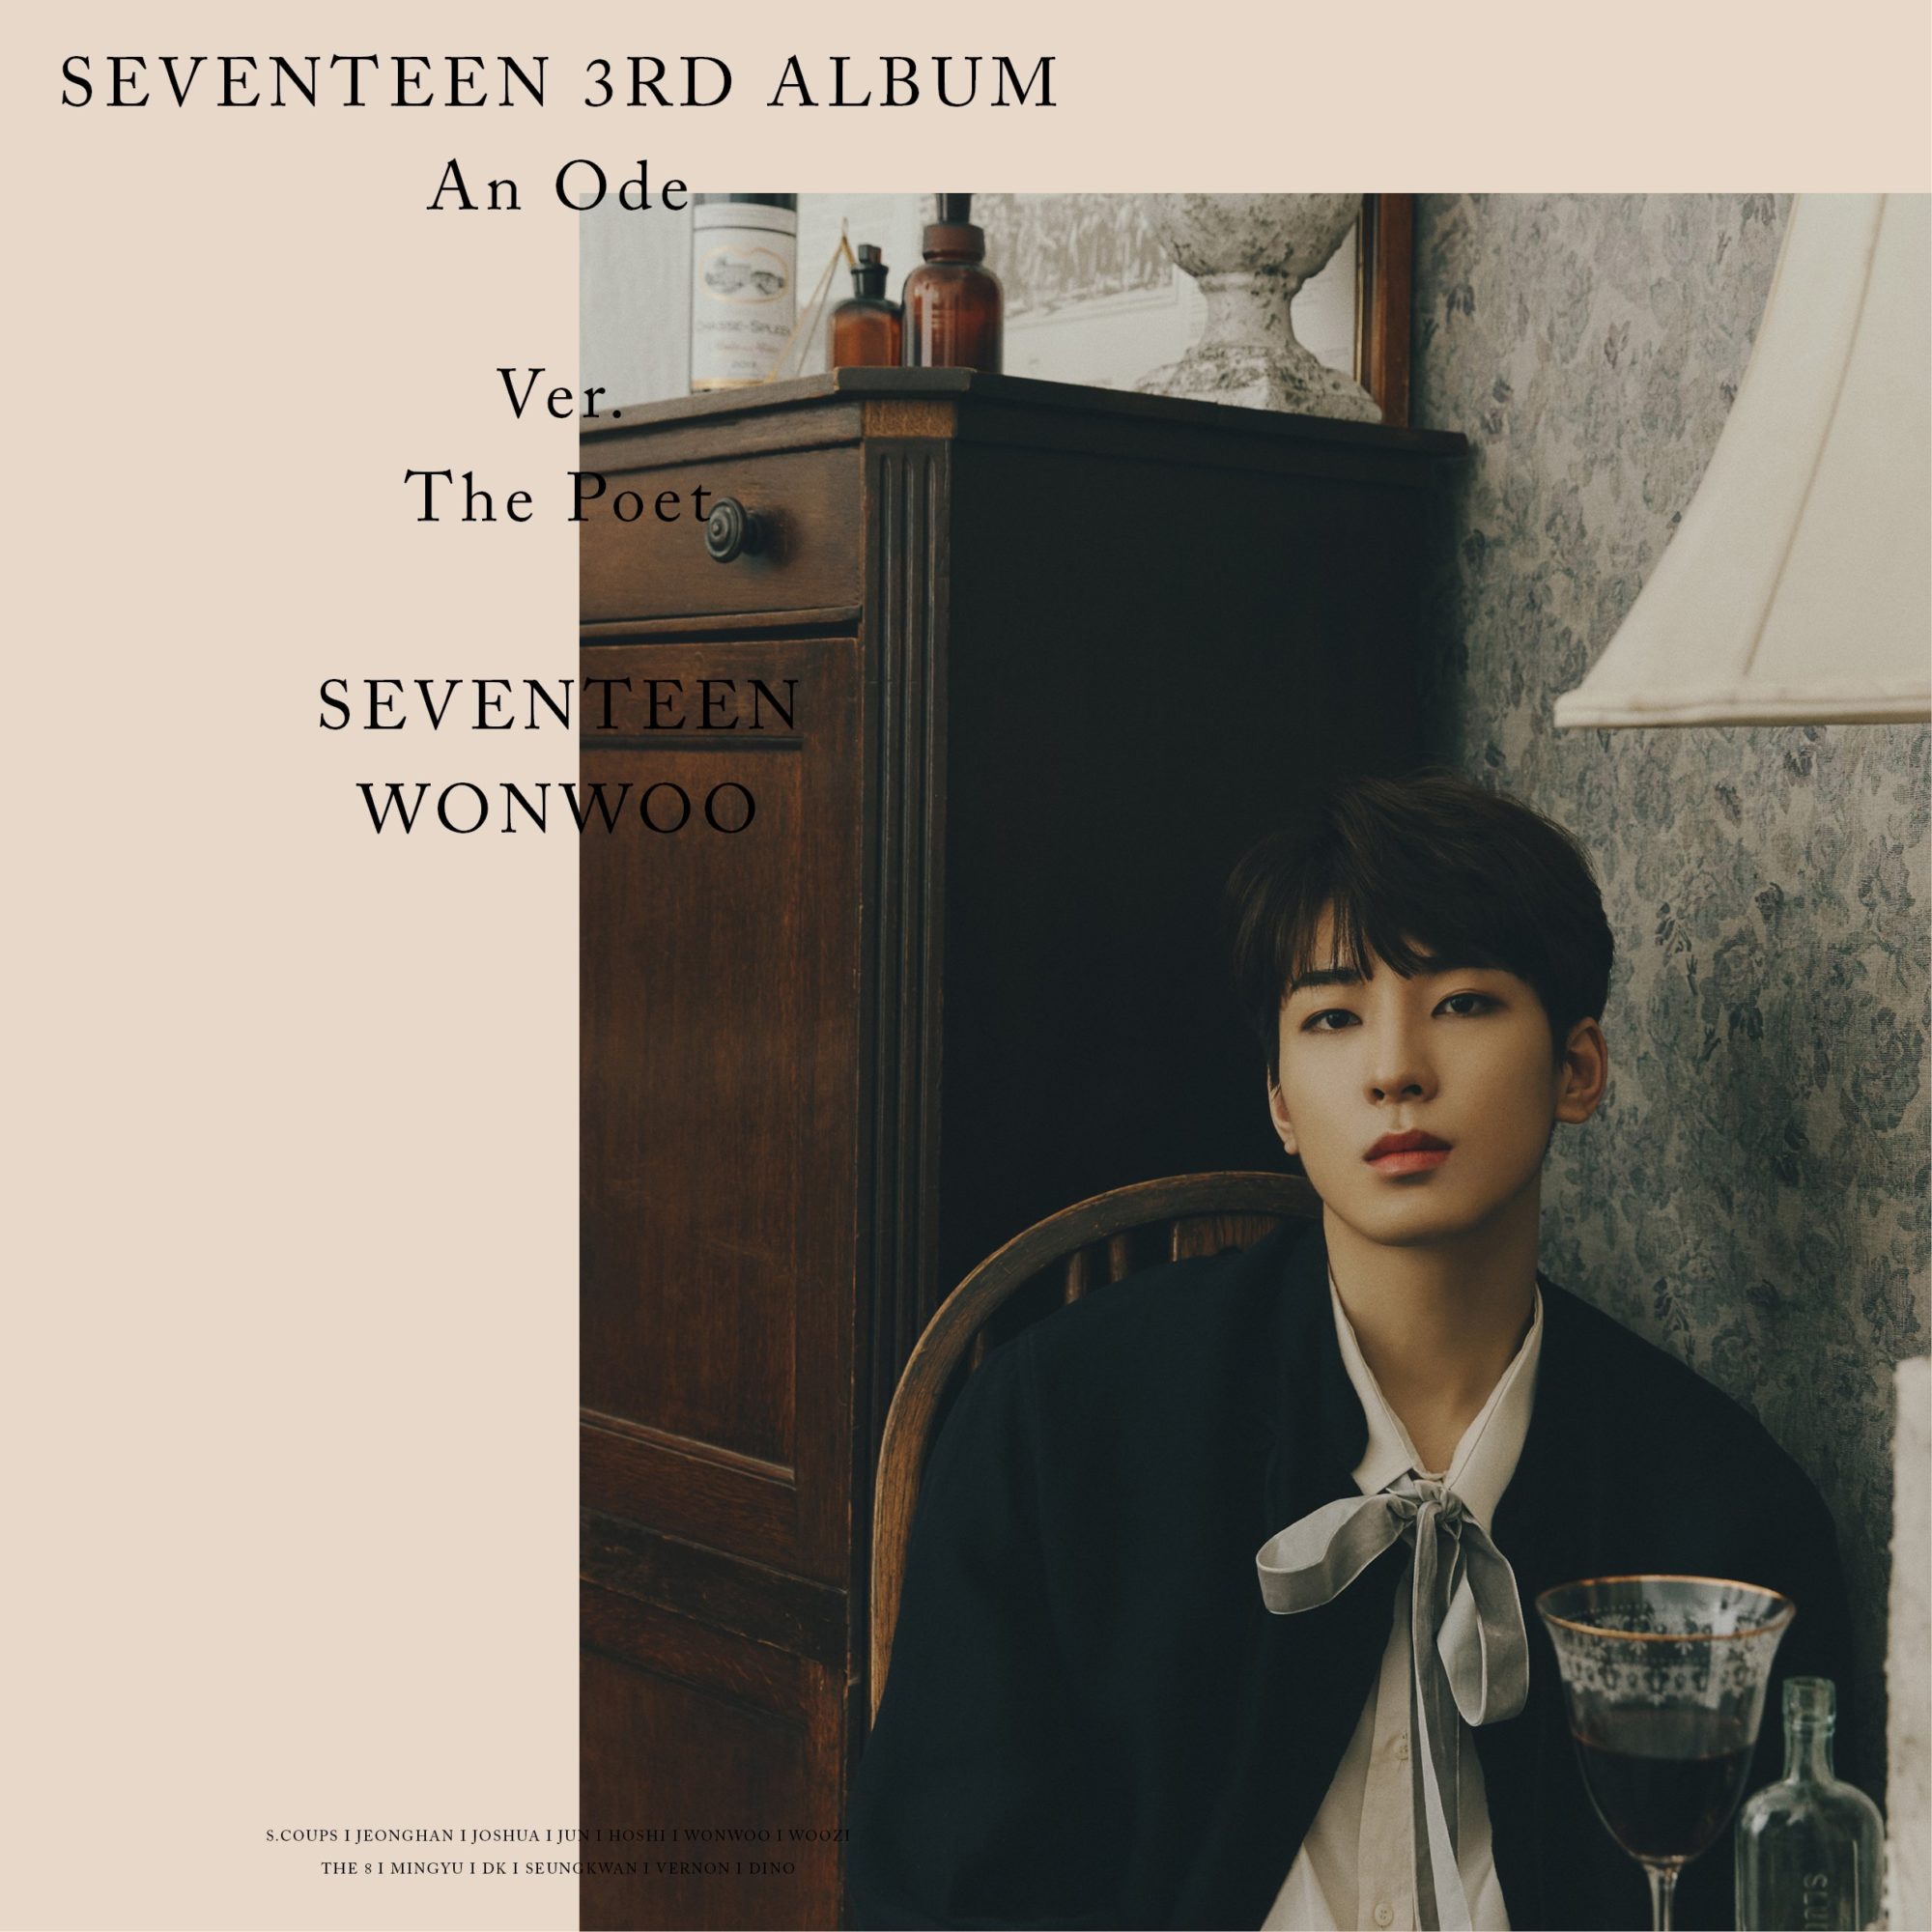 Seventeen An Ode The Poet Ver. Wonwoo